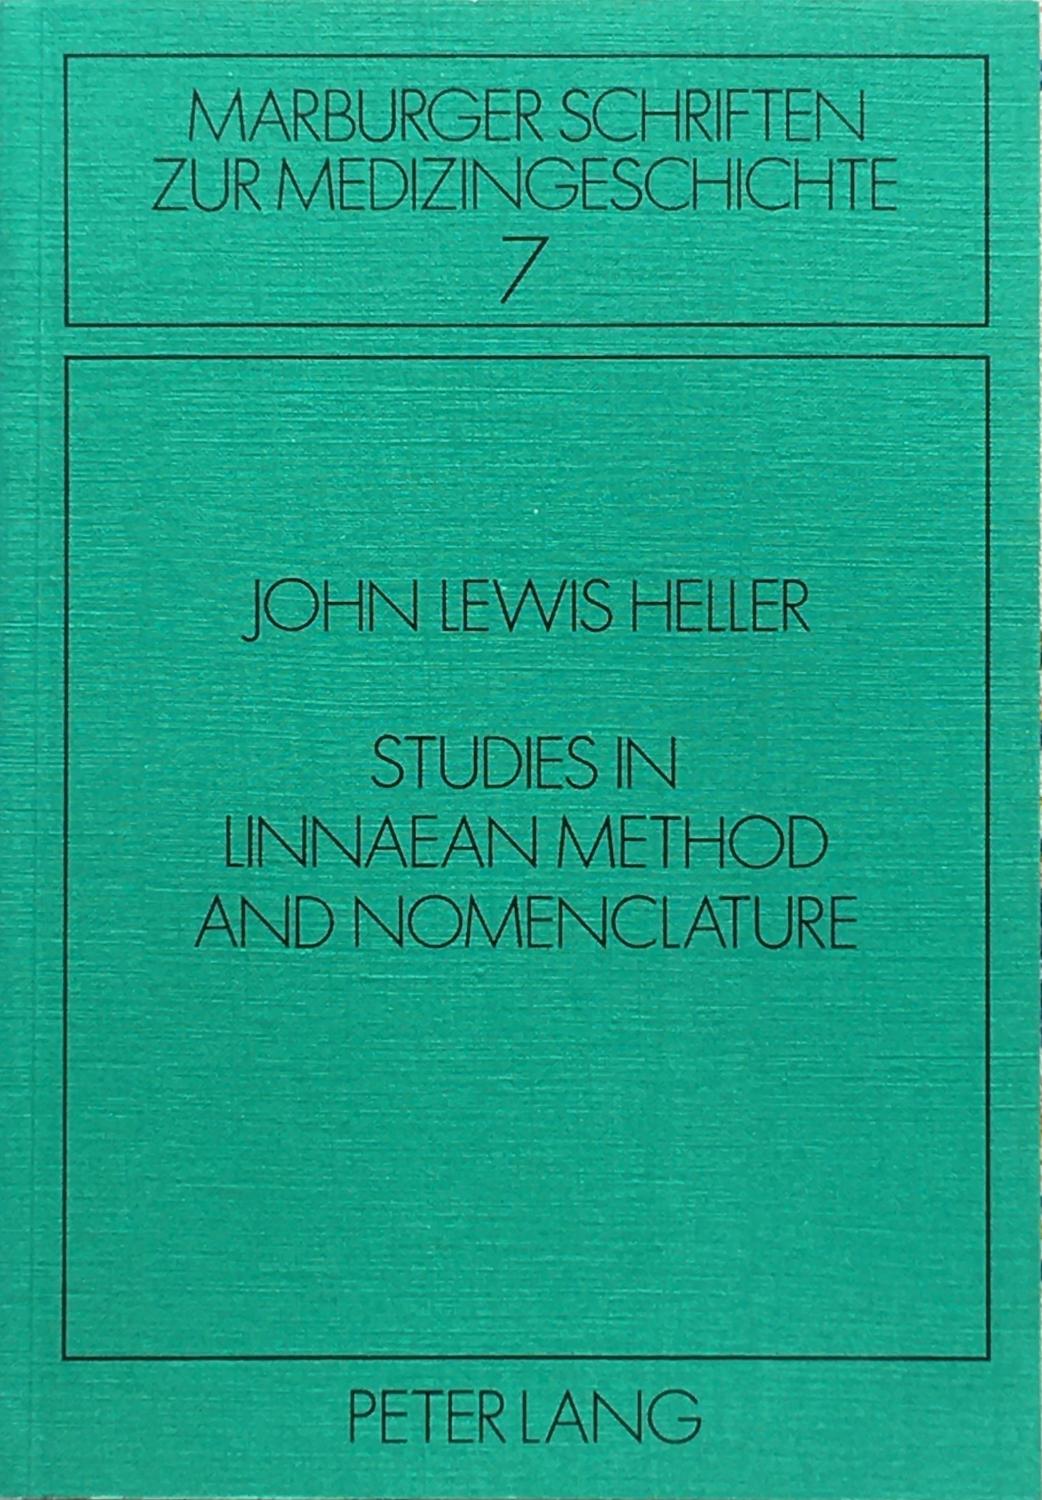 Studies in Linnaean method and nomenclature - Heller, J.L.